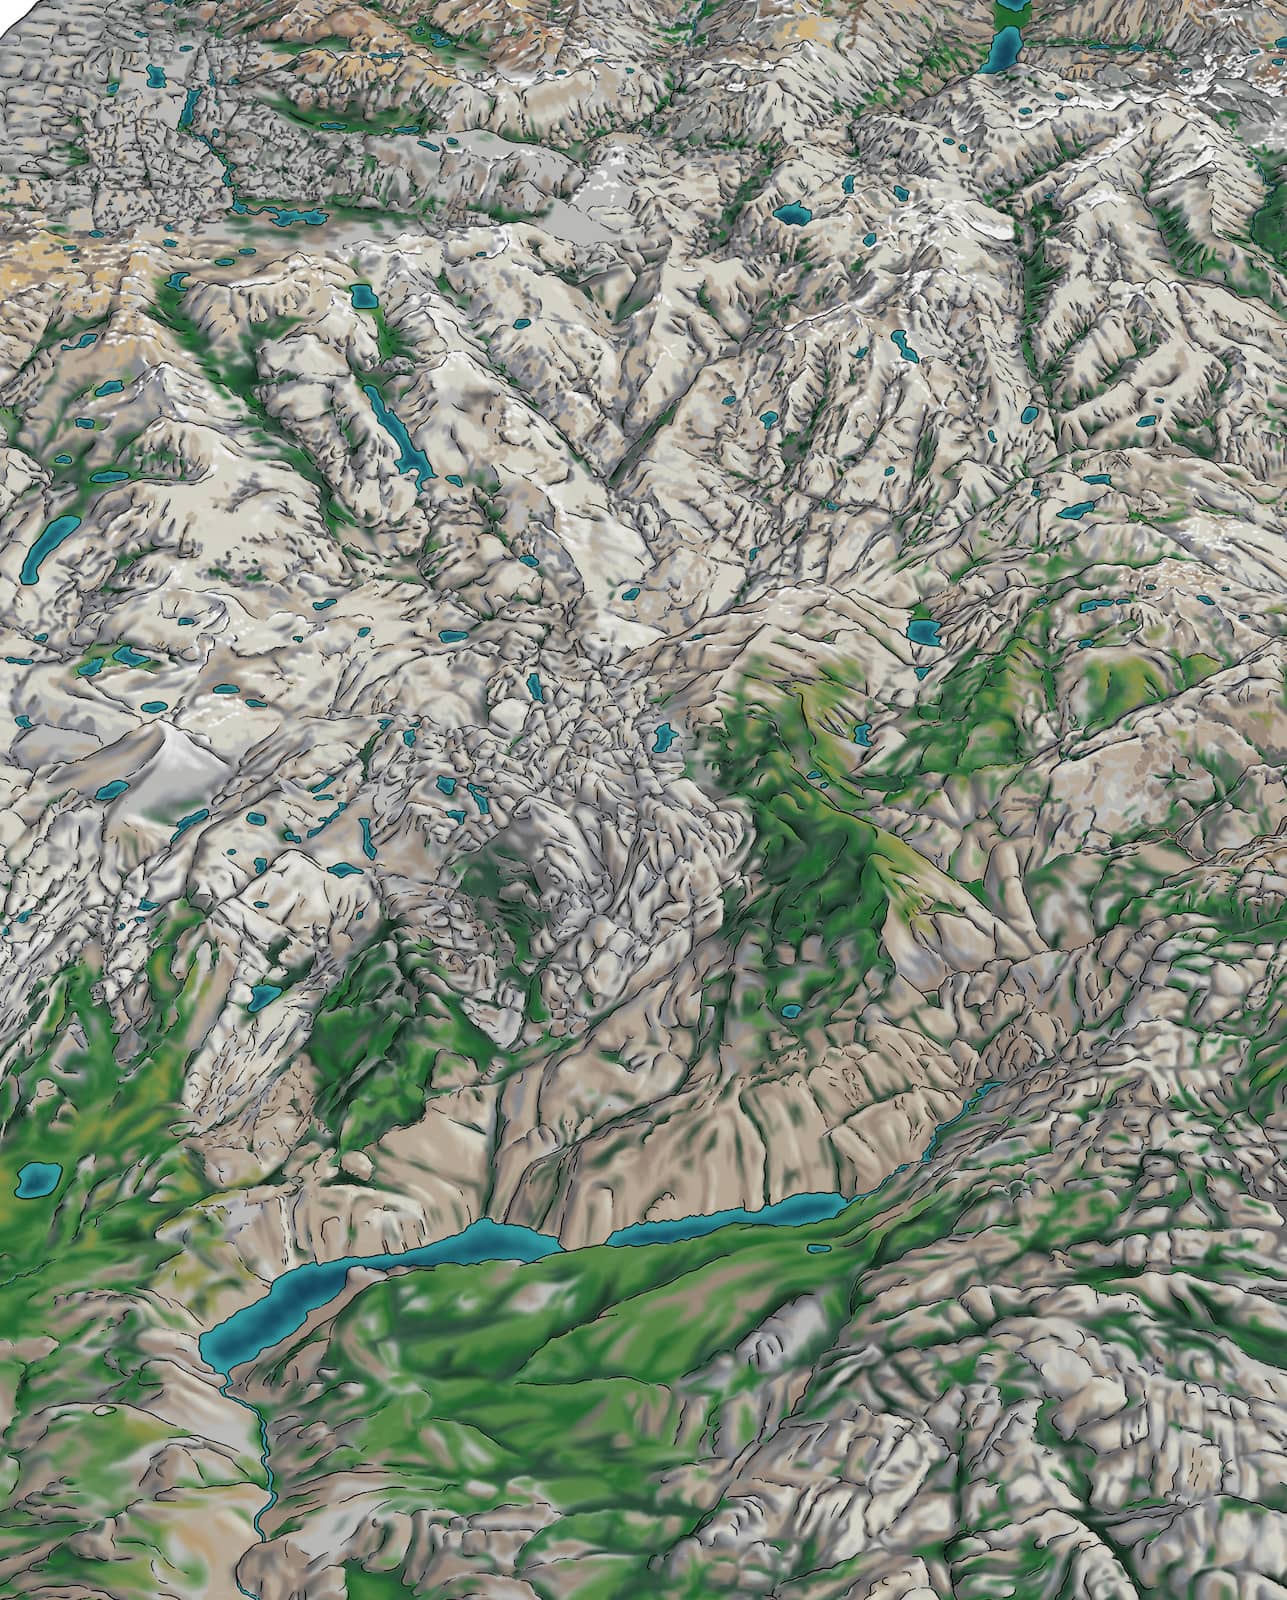 The Yosemite Map